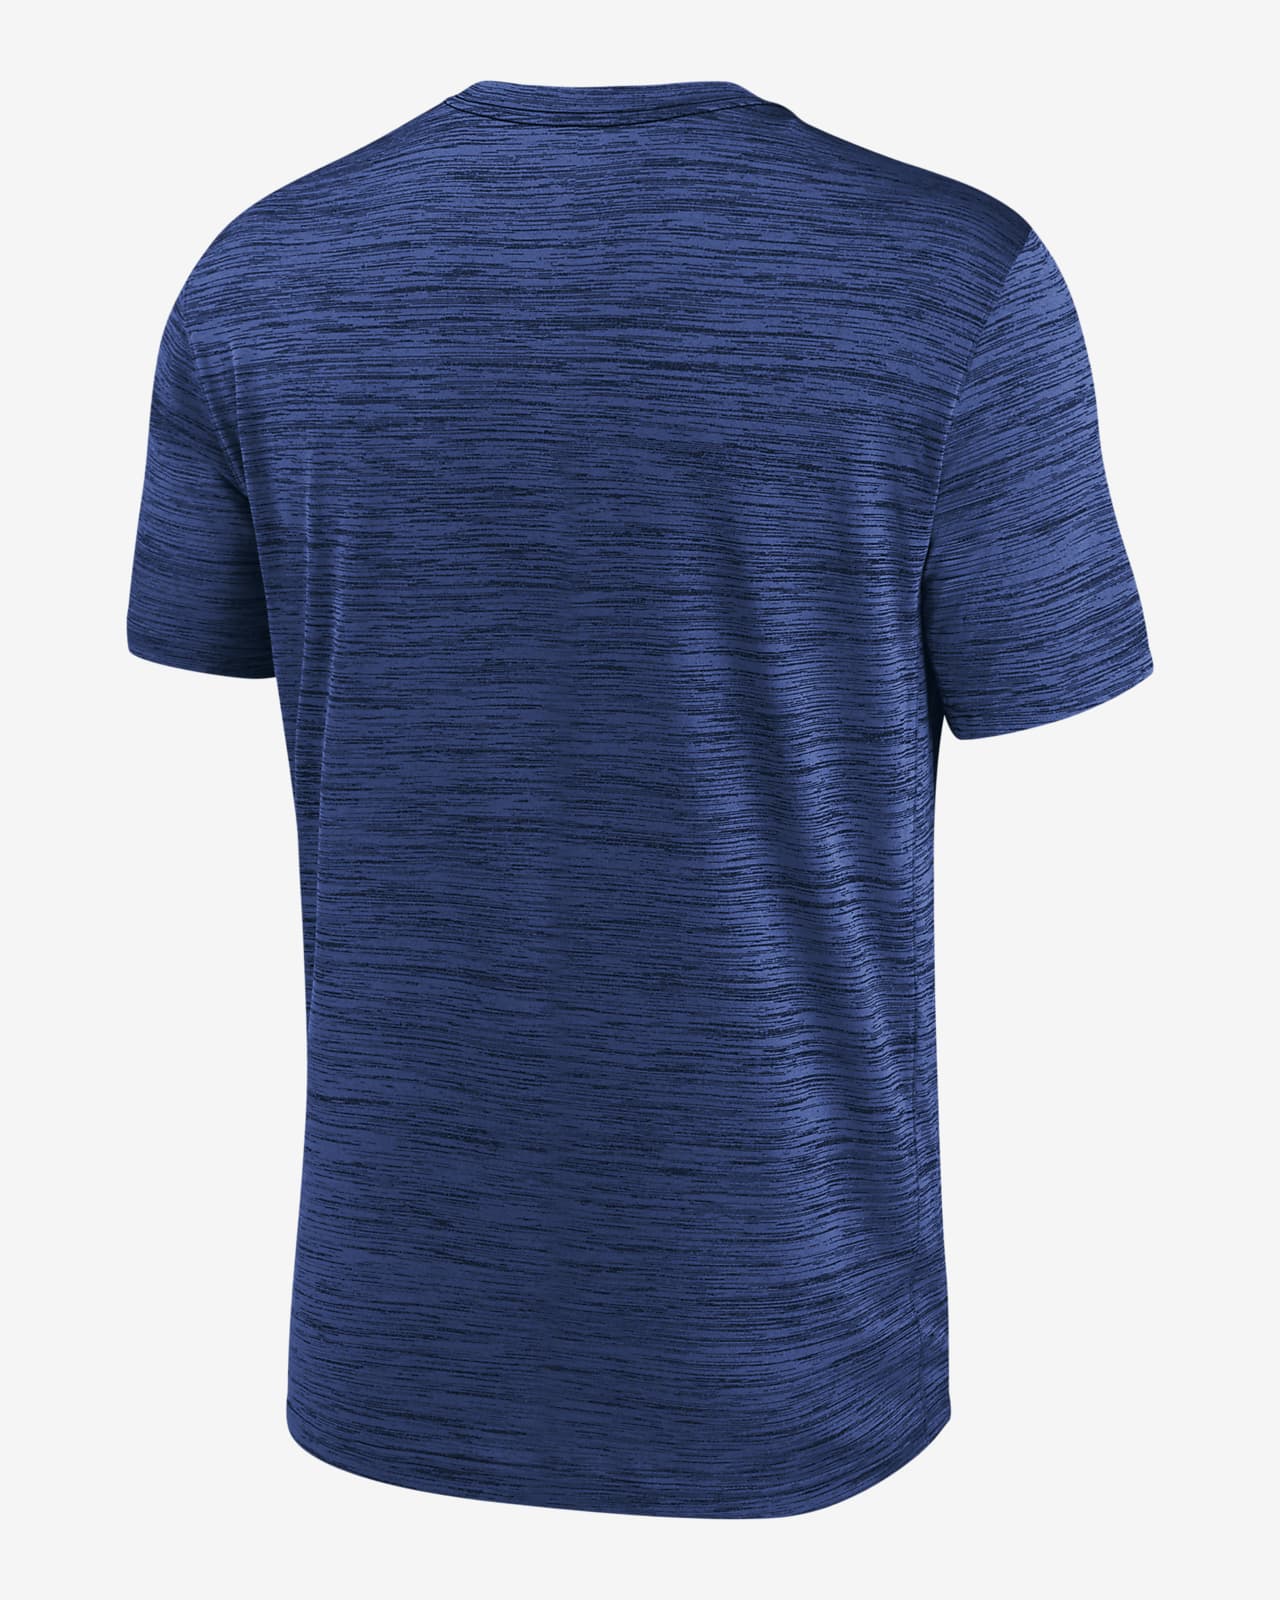 Nike Dri-FIT Velocity Practice (MLB Chicago Cubs) Men's T-Shirt